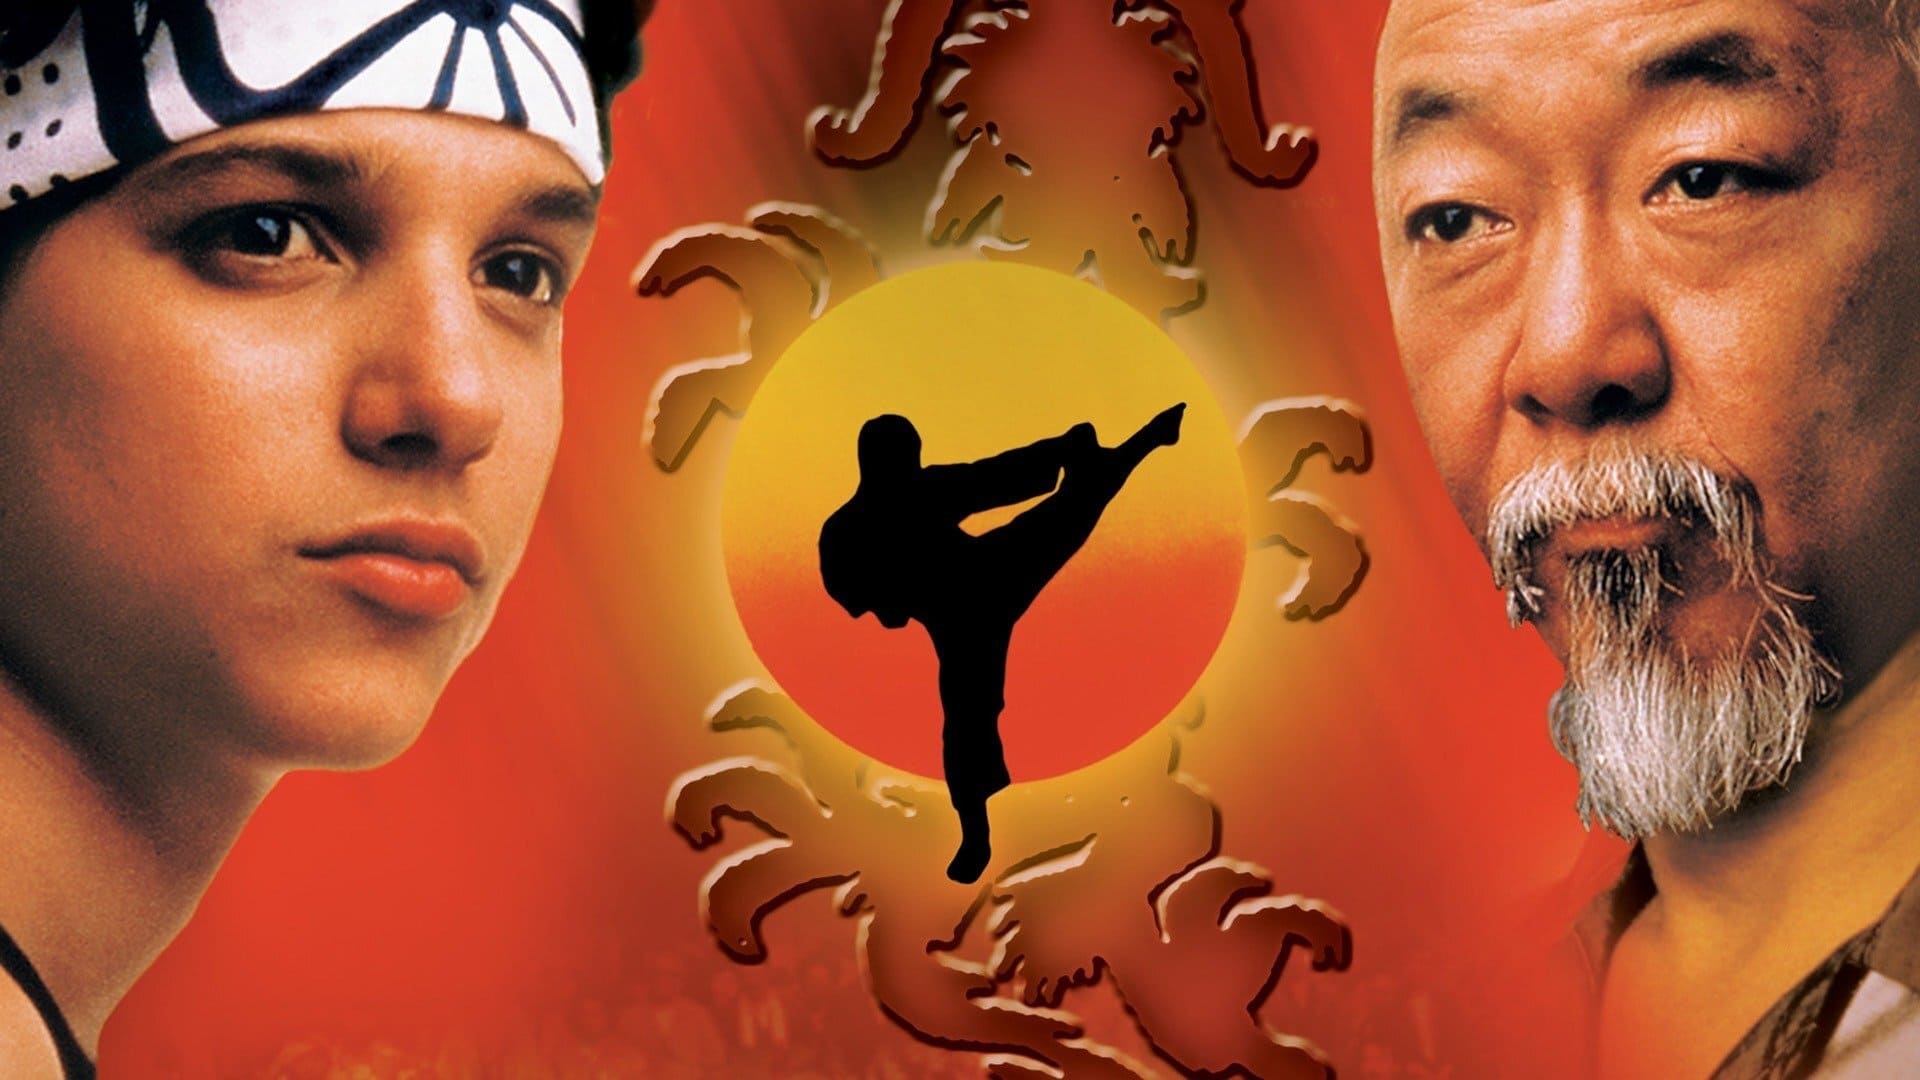 The Karate Kid Part II